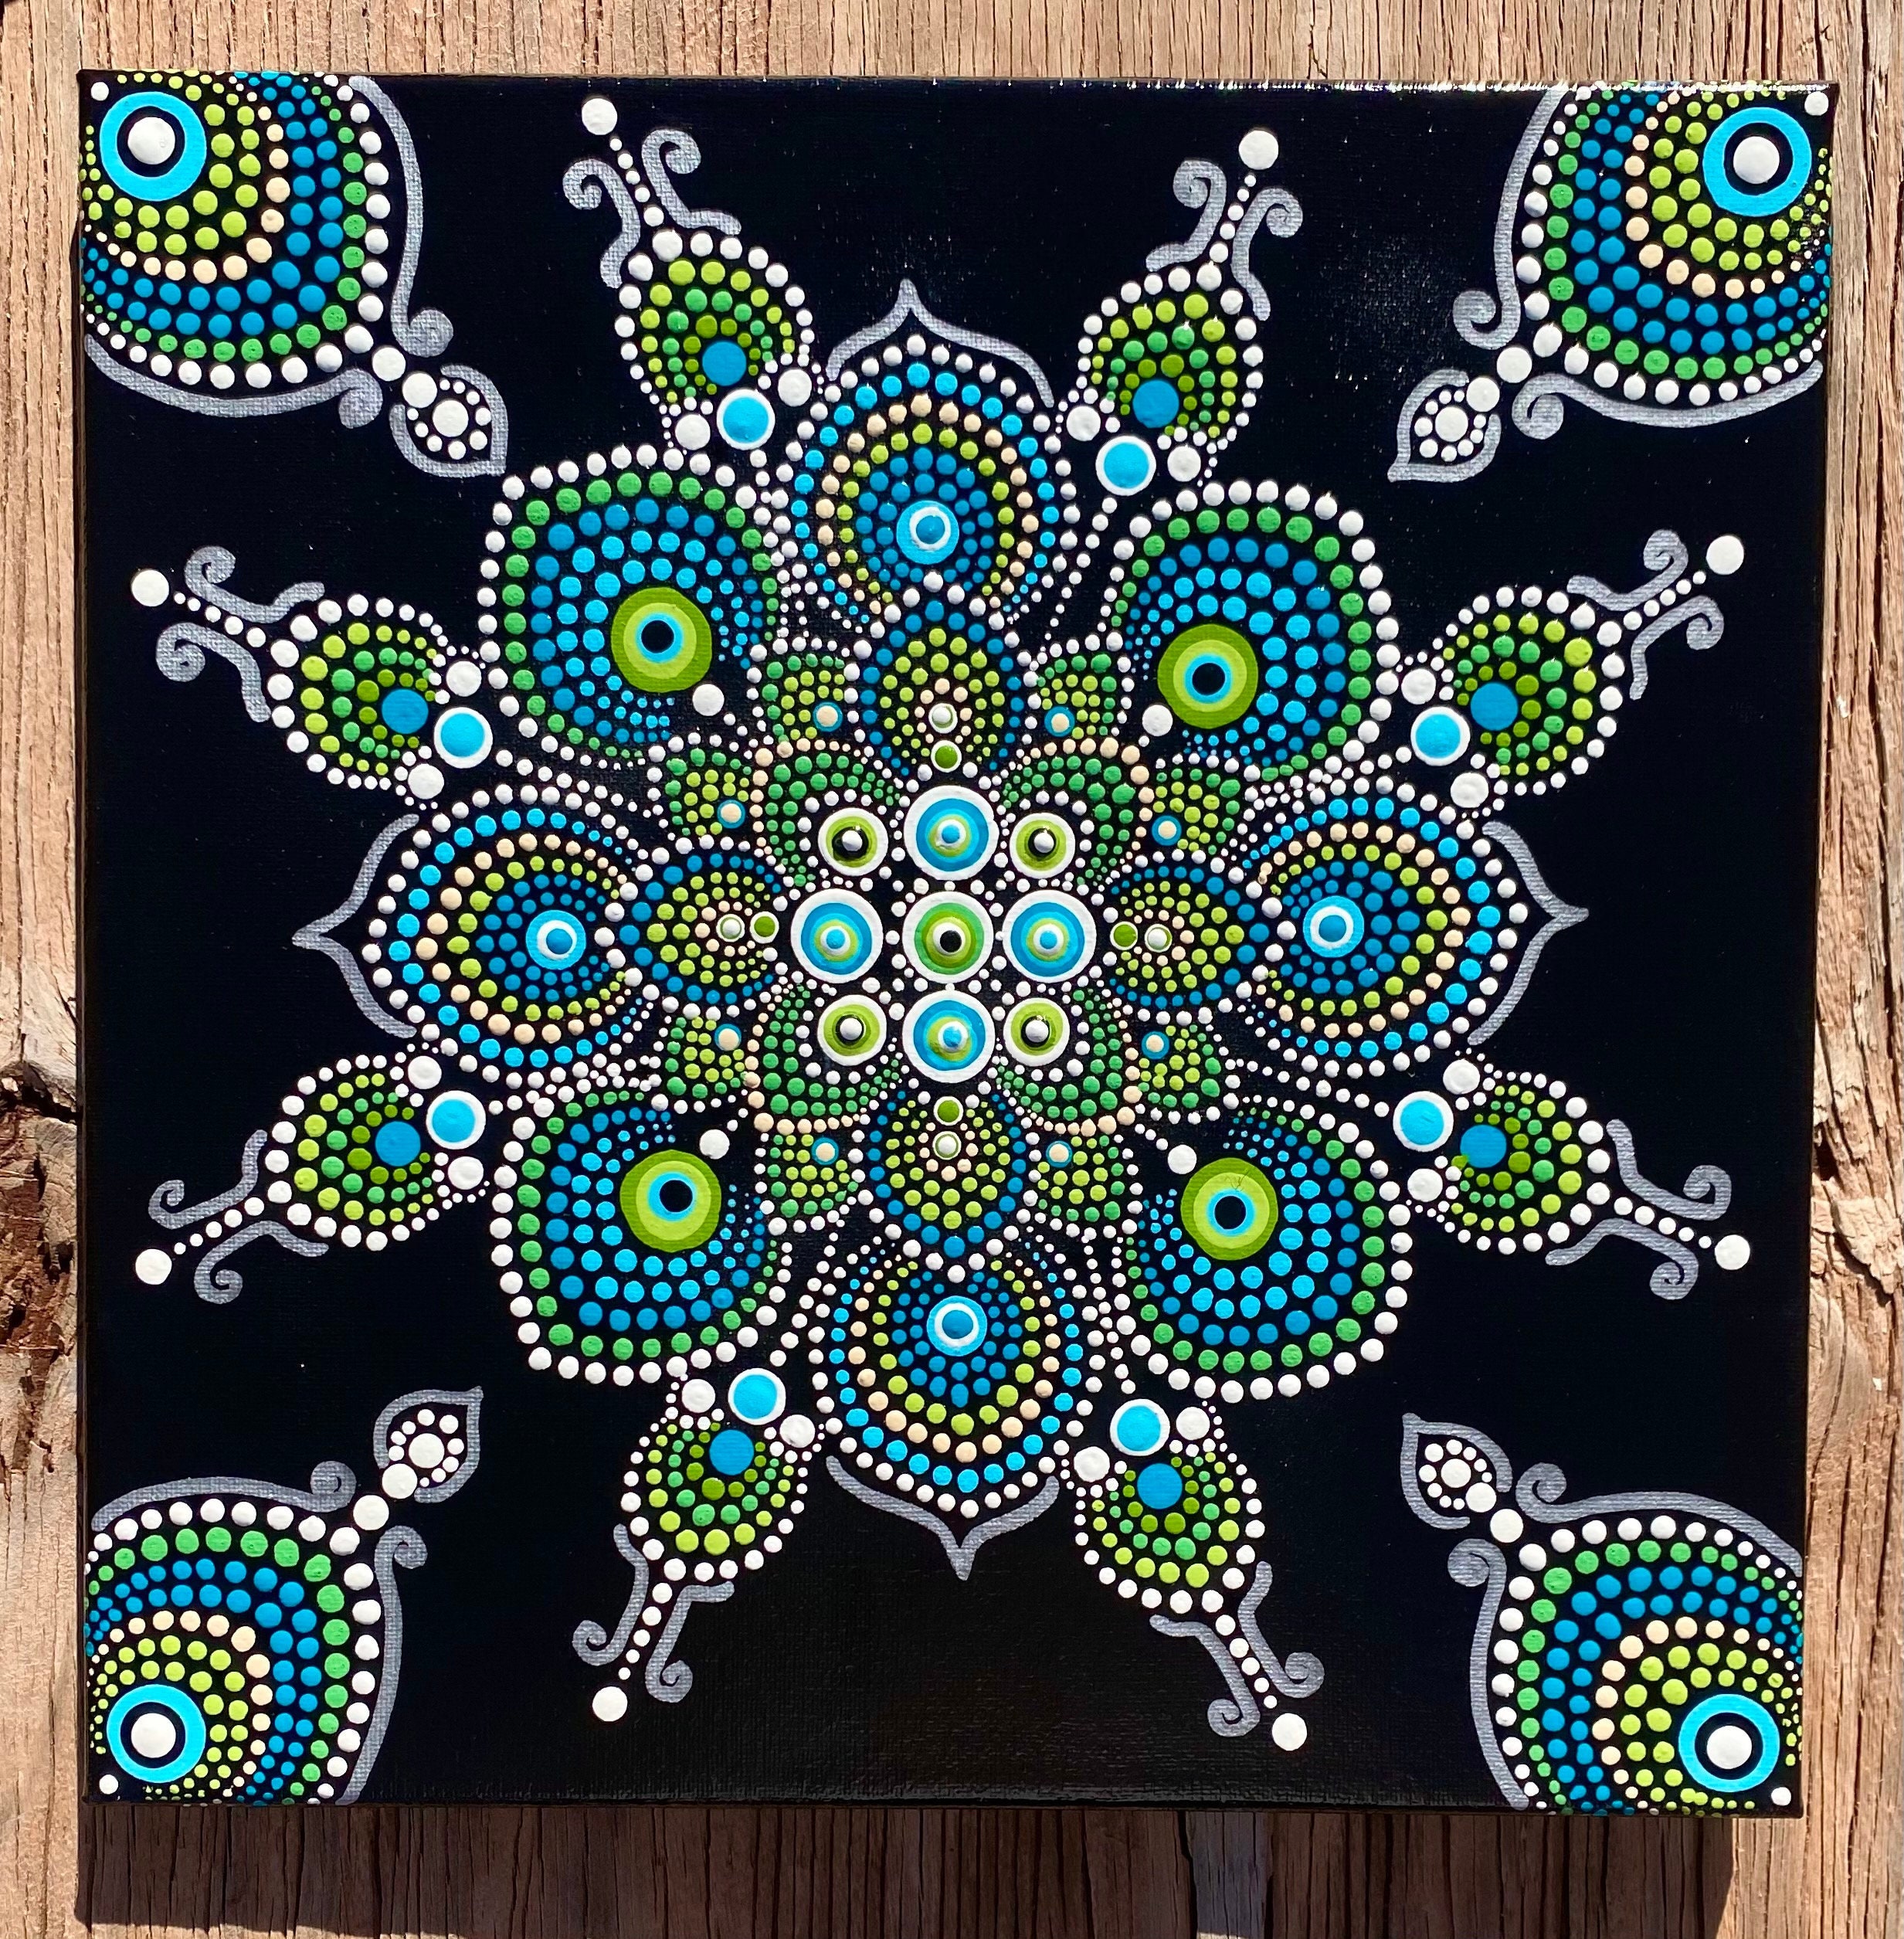 Mandala dot painting #12 by Ipaintdots on DeviantArt